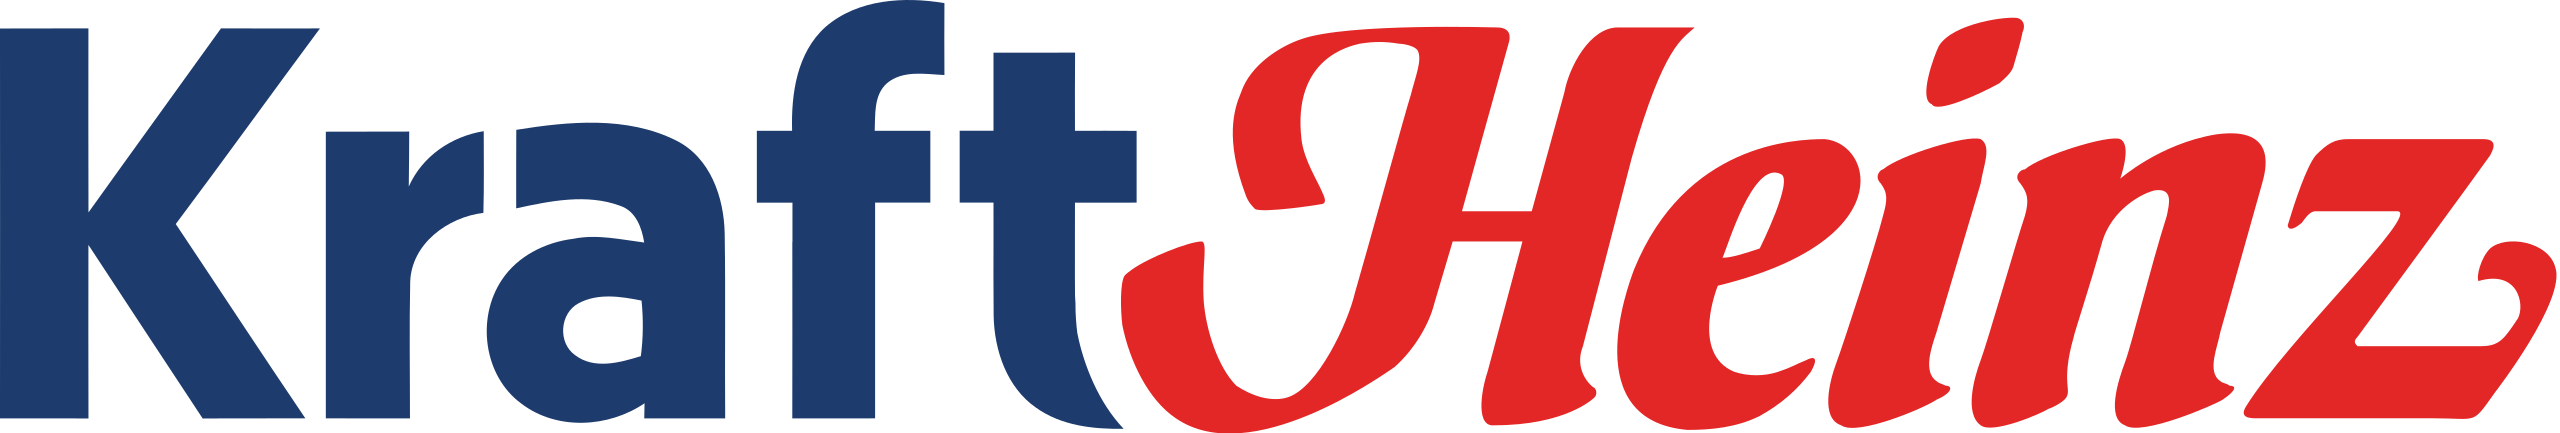 kraft Heinz Logo-1